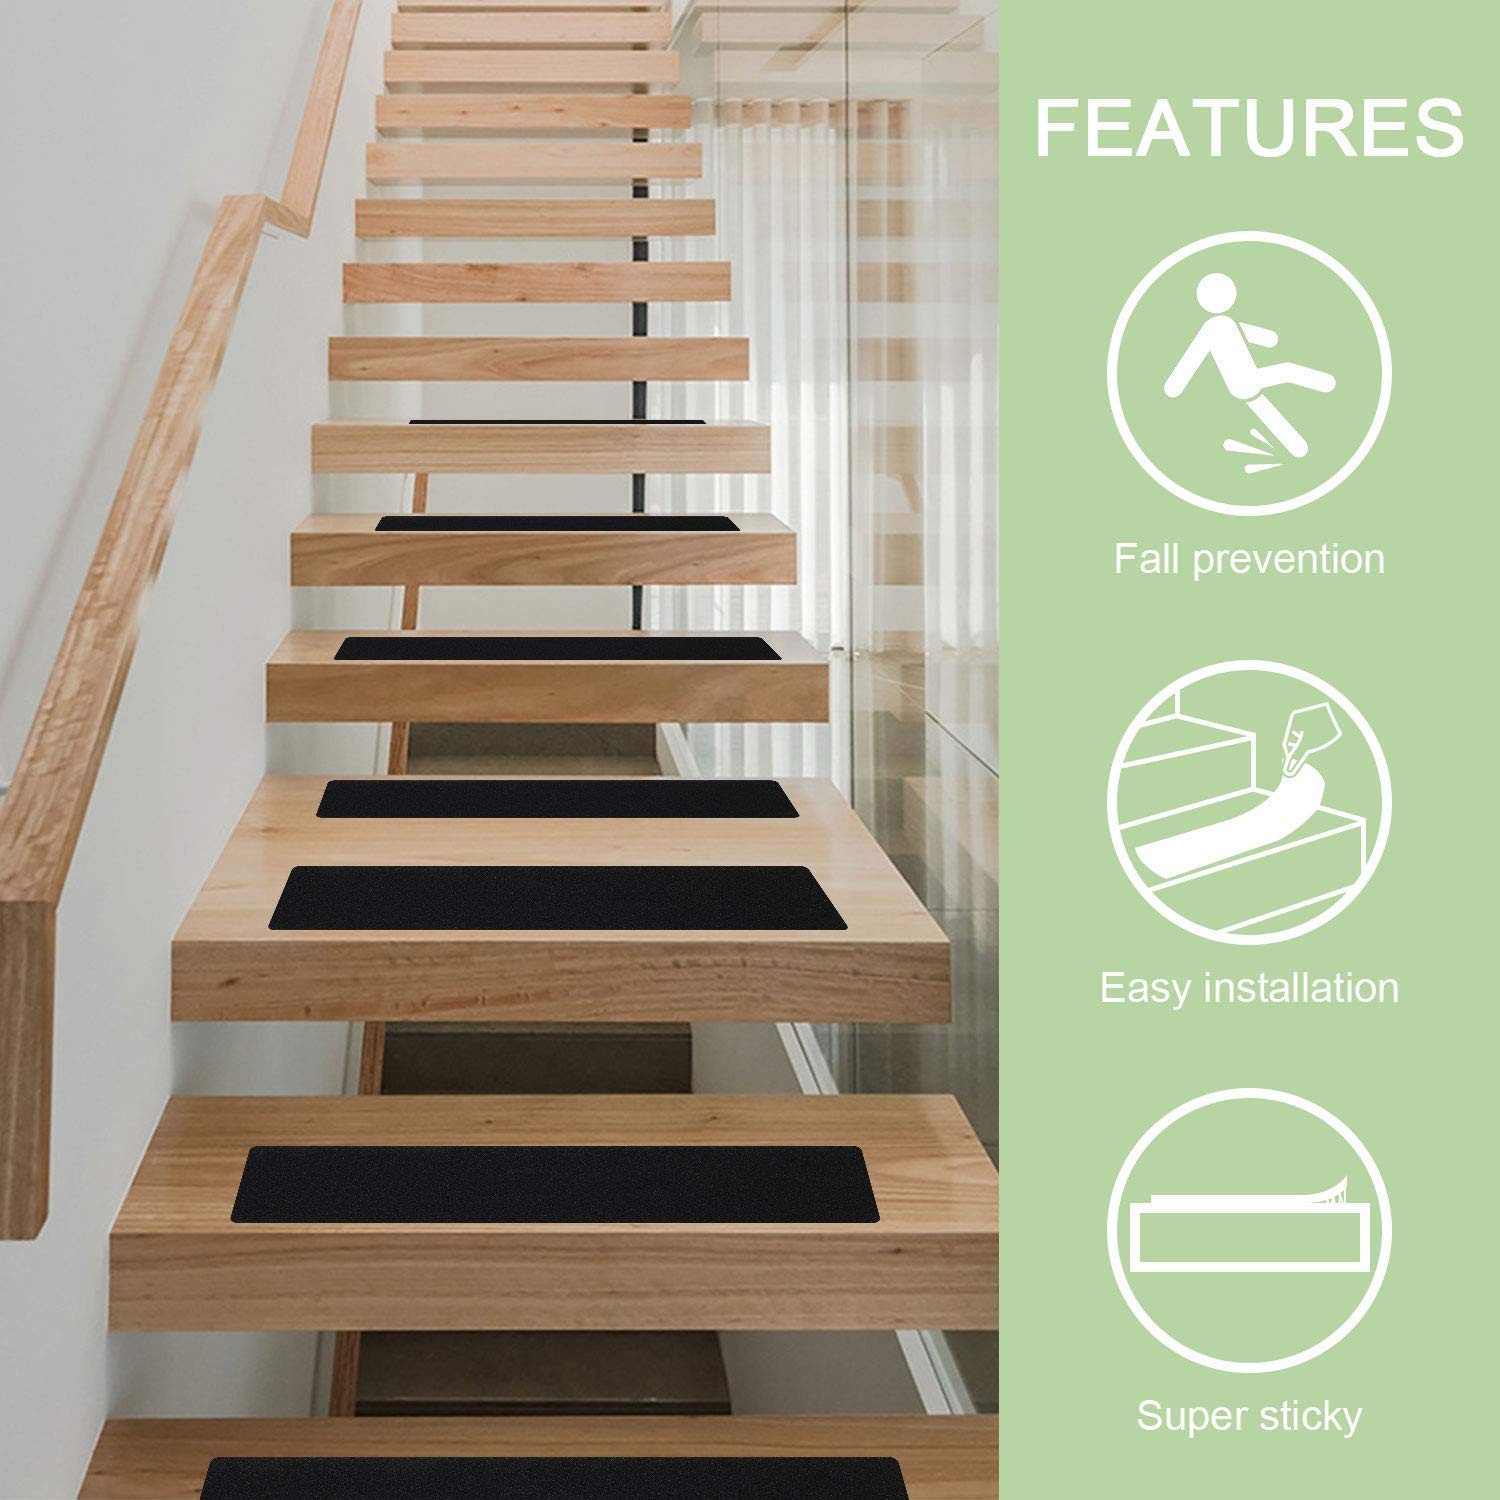 Anti Slip/Anti Skid Strip for Stairs, Slippery floors, Ramps - (15x60 cm, Black) LifeKrafts